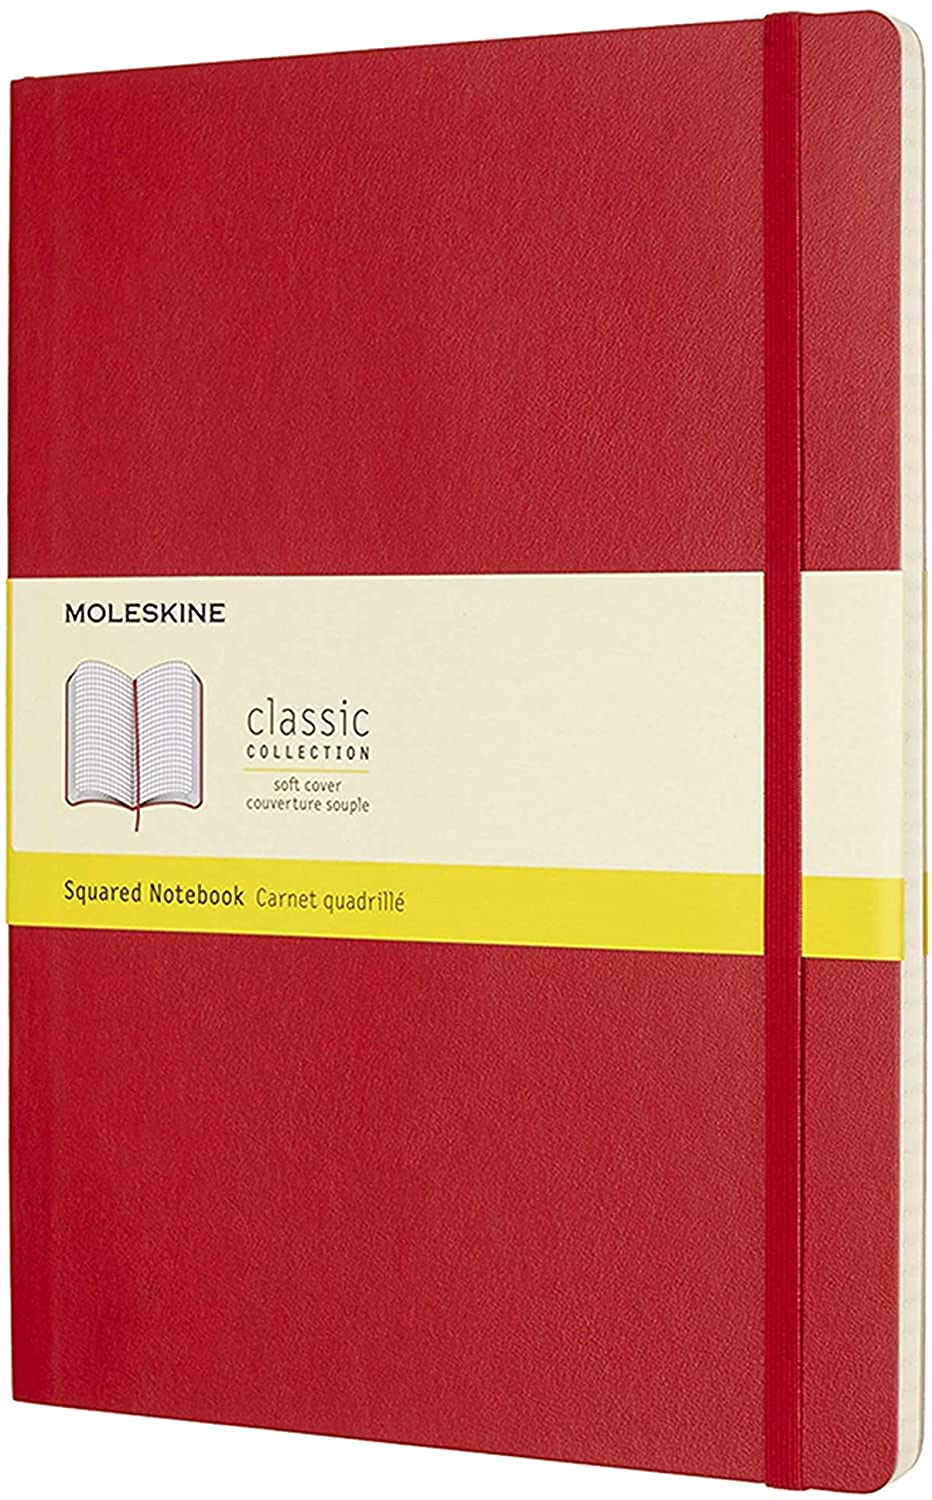 Carnet - Moleskine Classic - Extra Large, Squared, Soft Cover - Scarlet Red | Moleskine